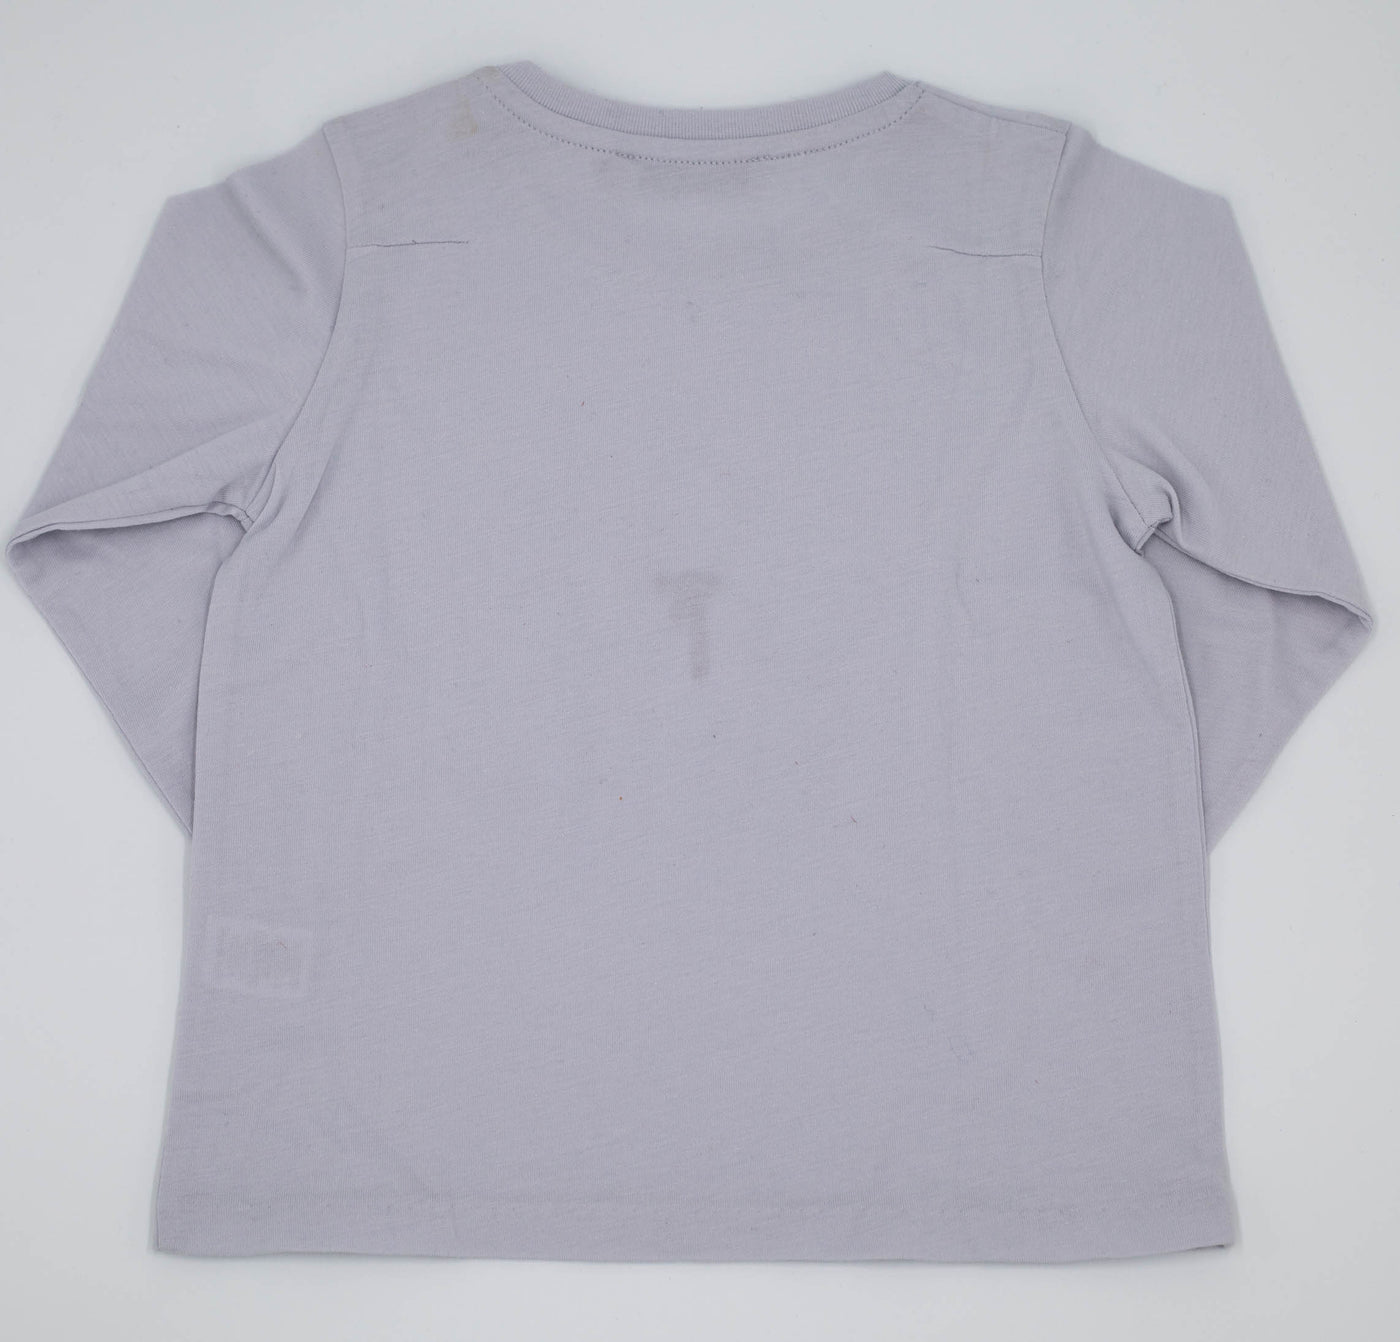 Baby Dior – CS Tee Shirt